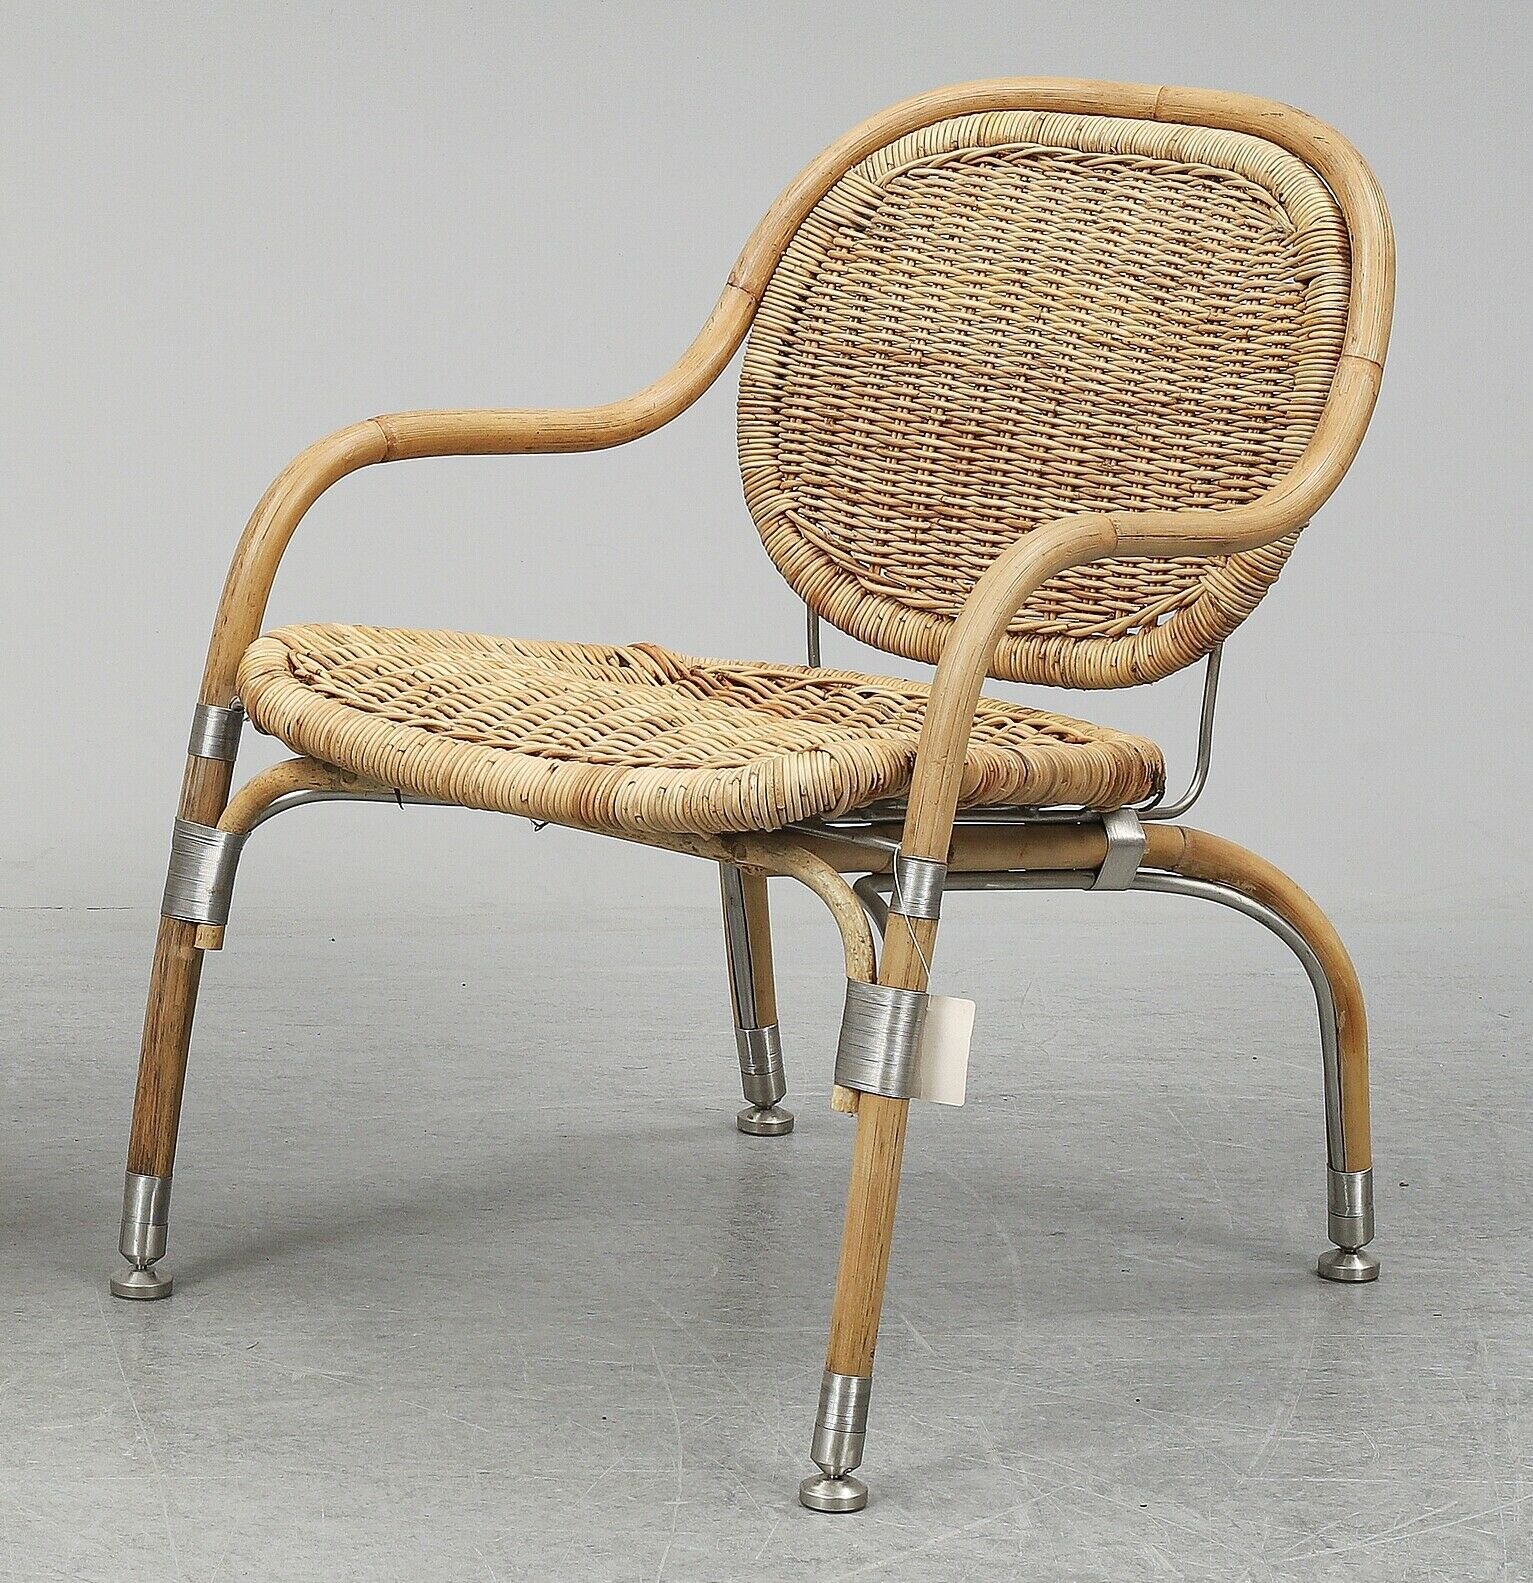 Rare Ikea vintage ratten chair £450 